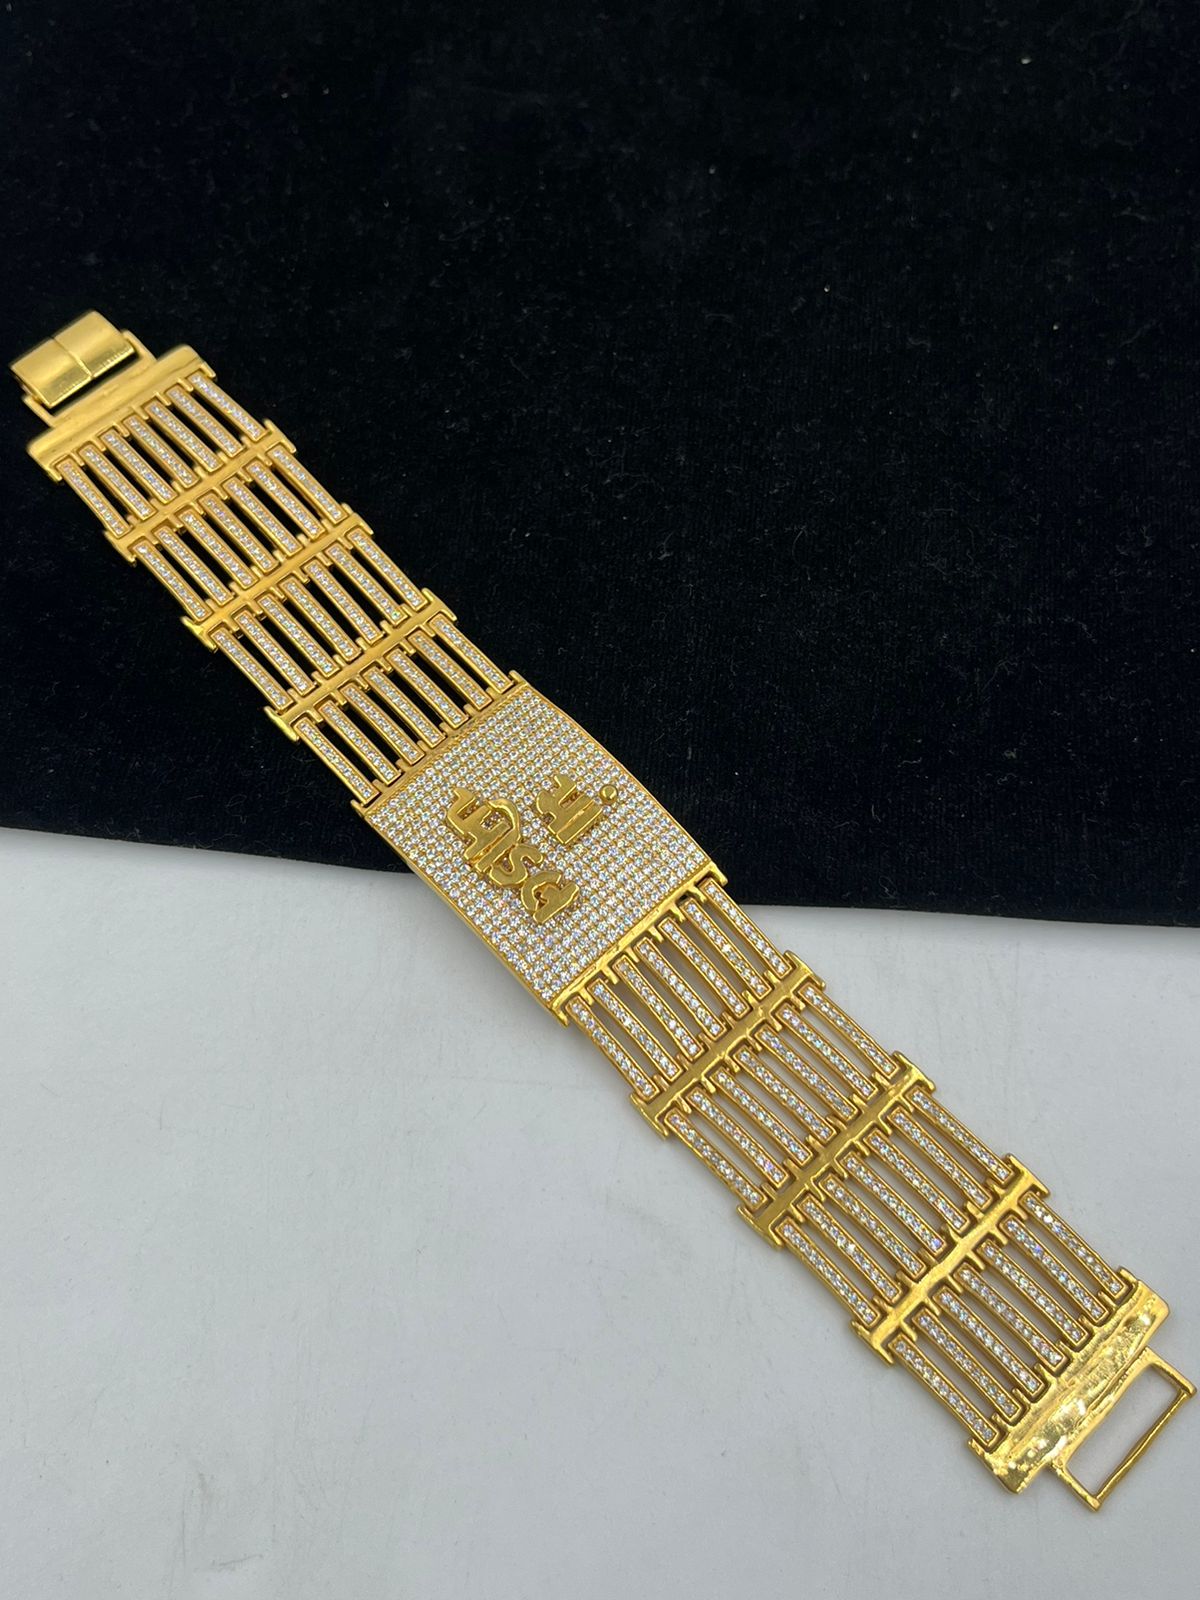 22 Carat Mens Gold Bracelet, 28gm at Rs 110000 in Mumbai | ID: 25388546162